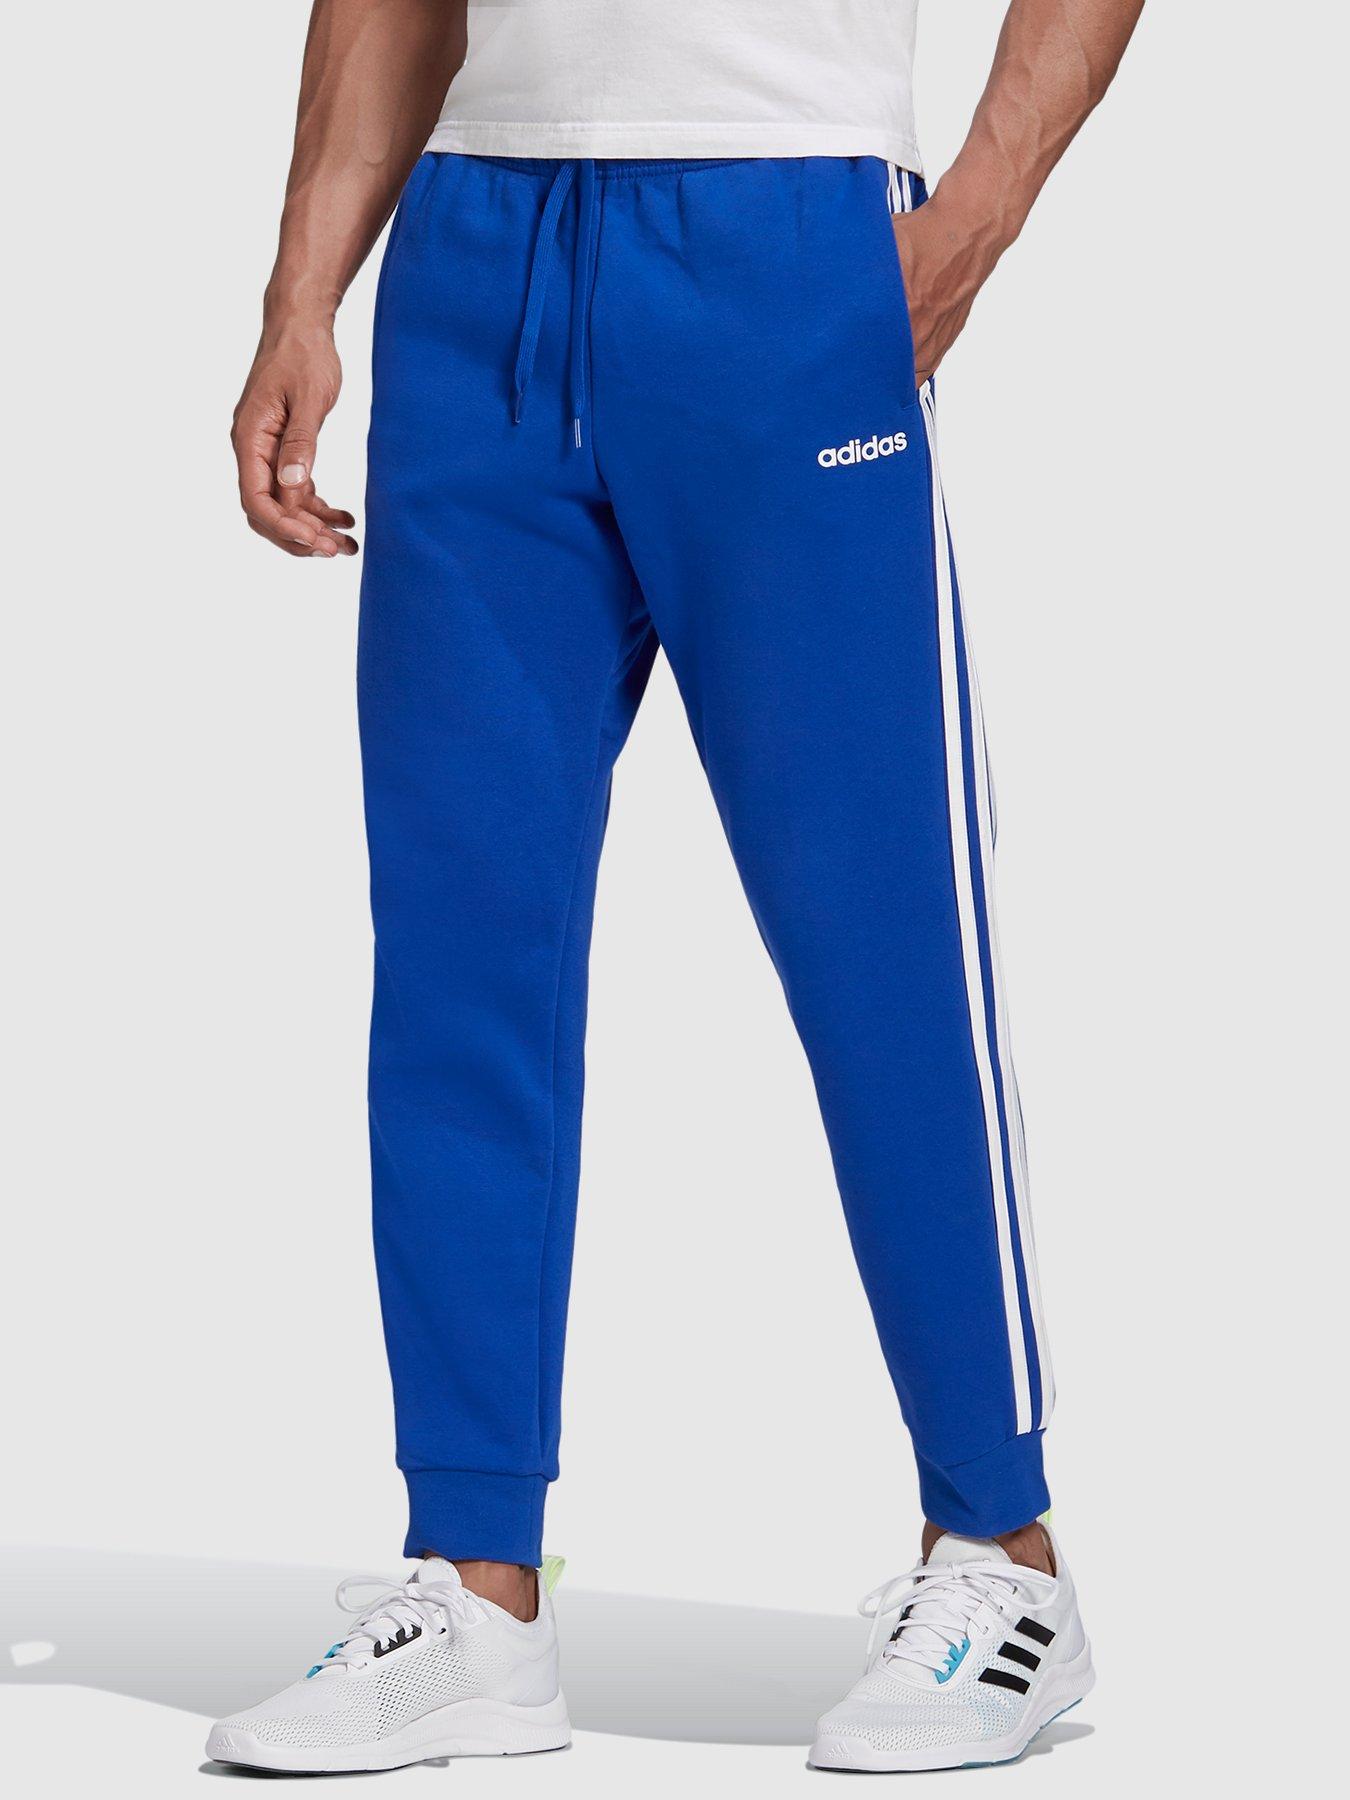 mens blue adidas track pants